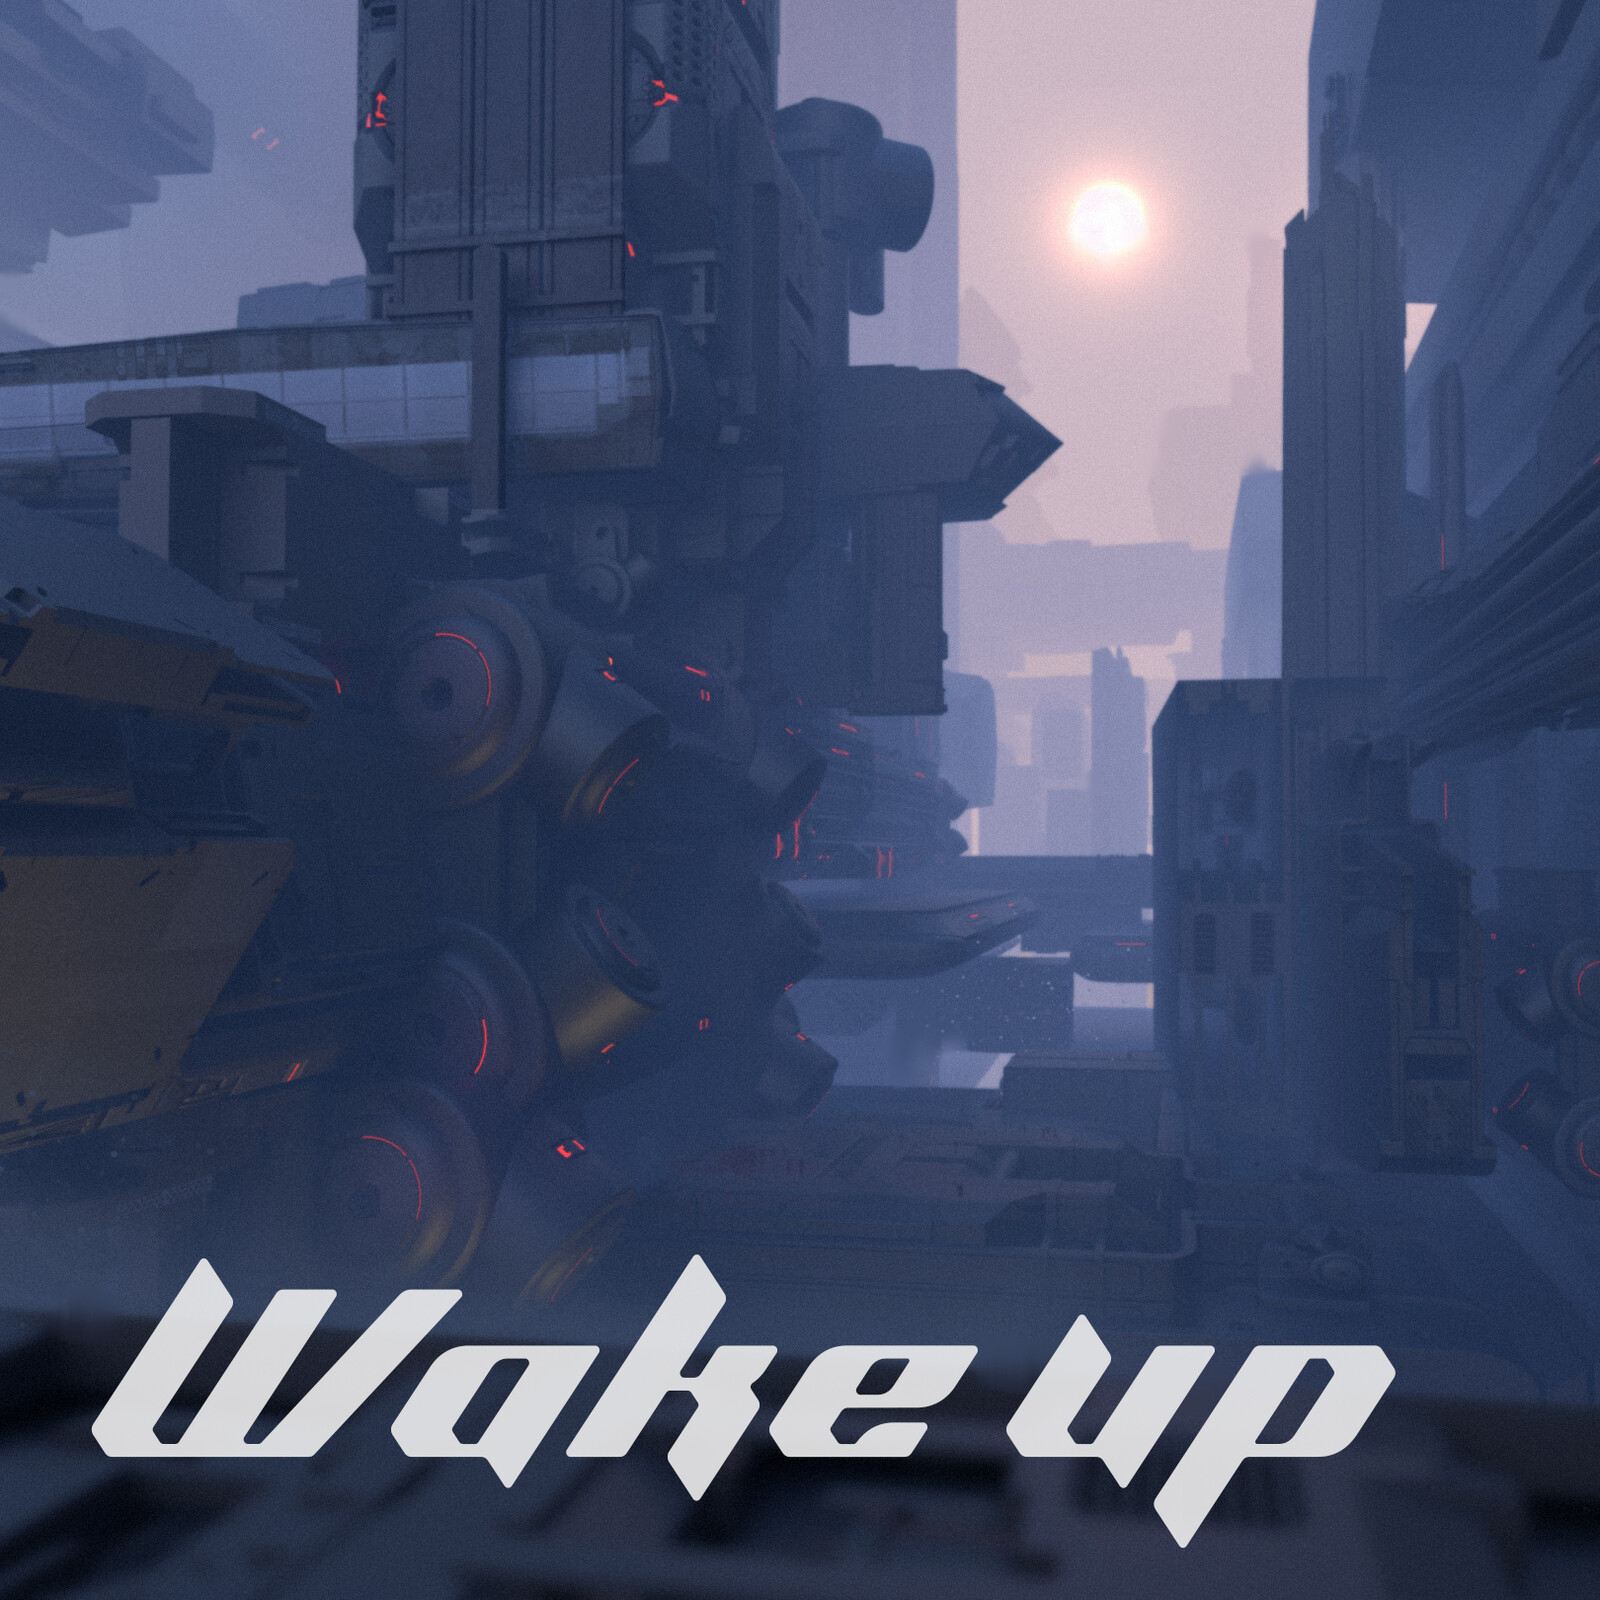 WAKE UP - Environment Design